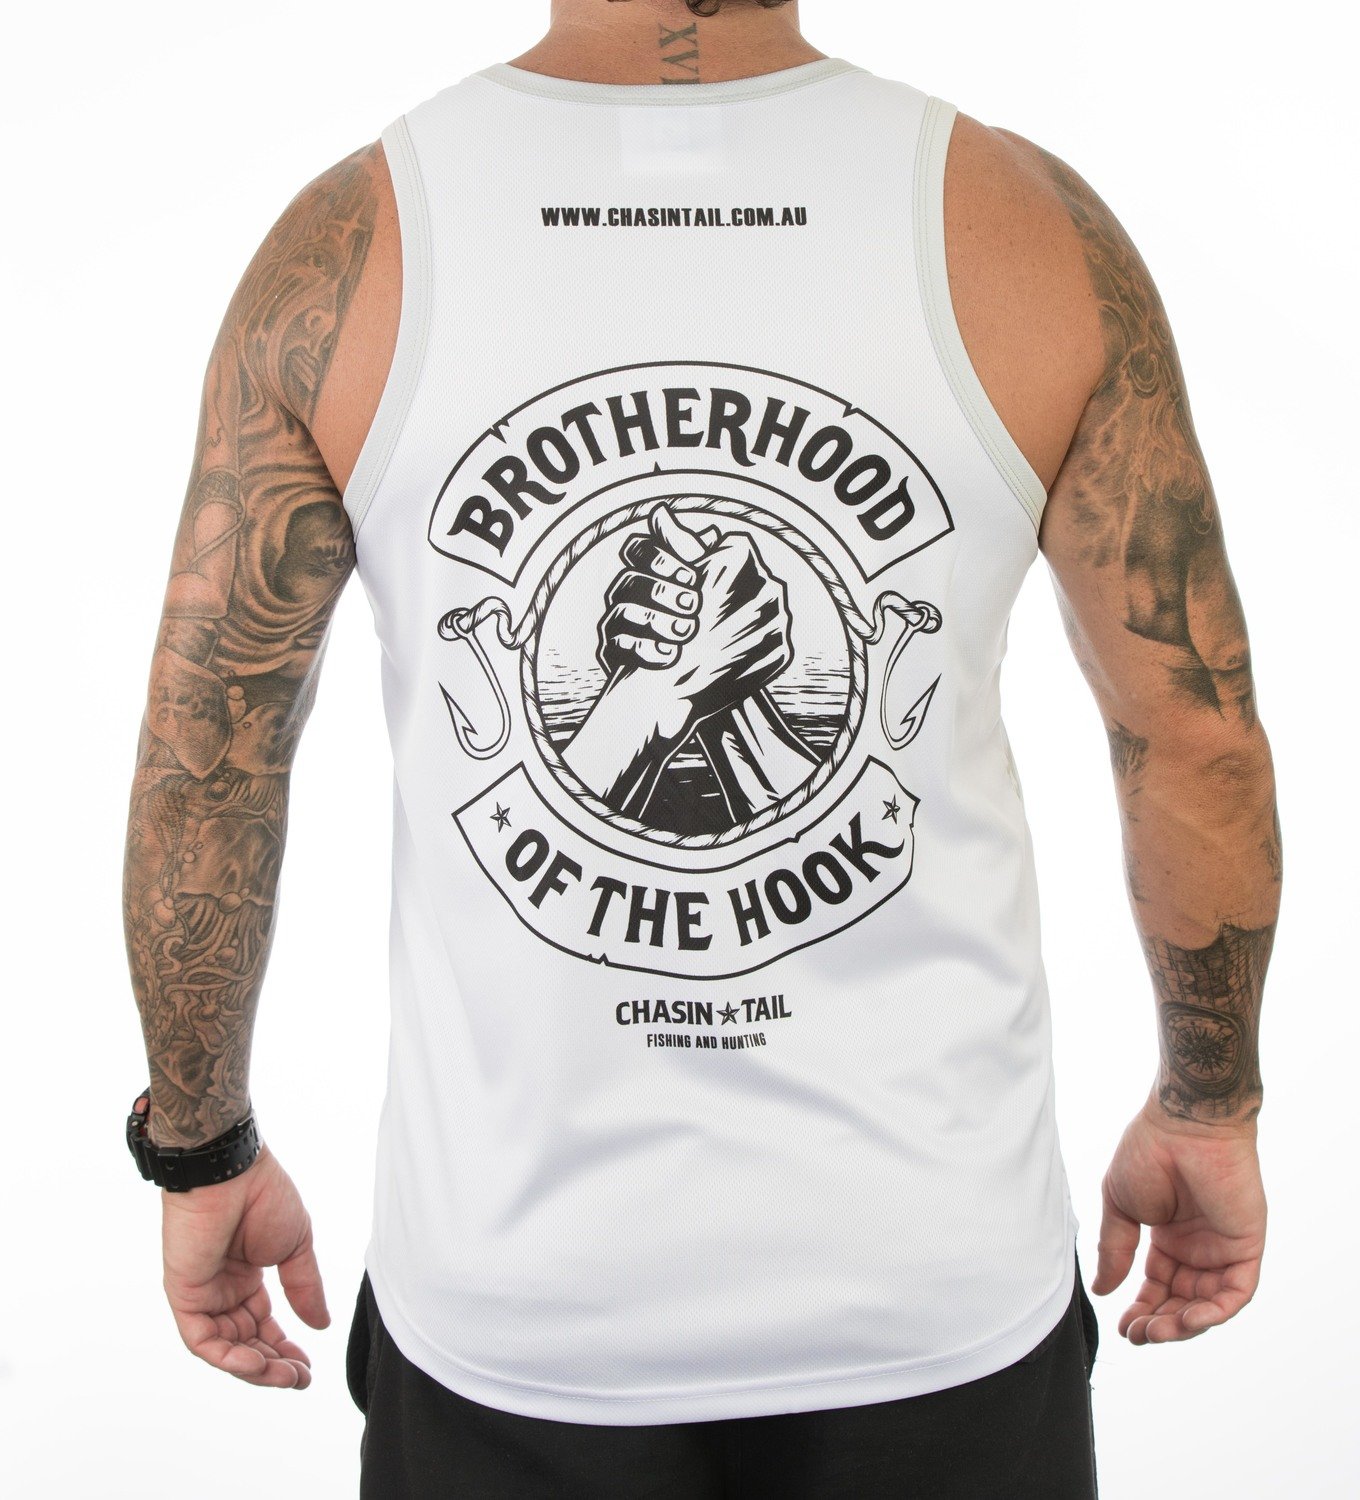 BROTHERHOOD OF THE HOOK singlet / white sublimated